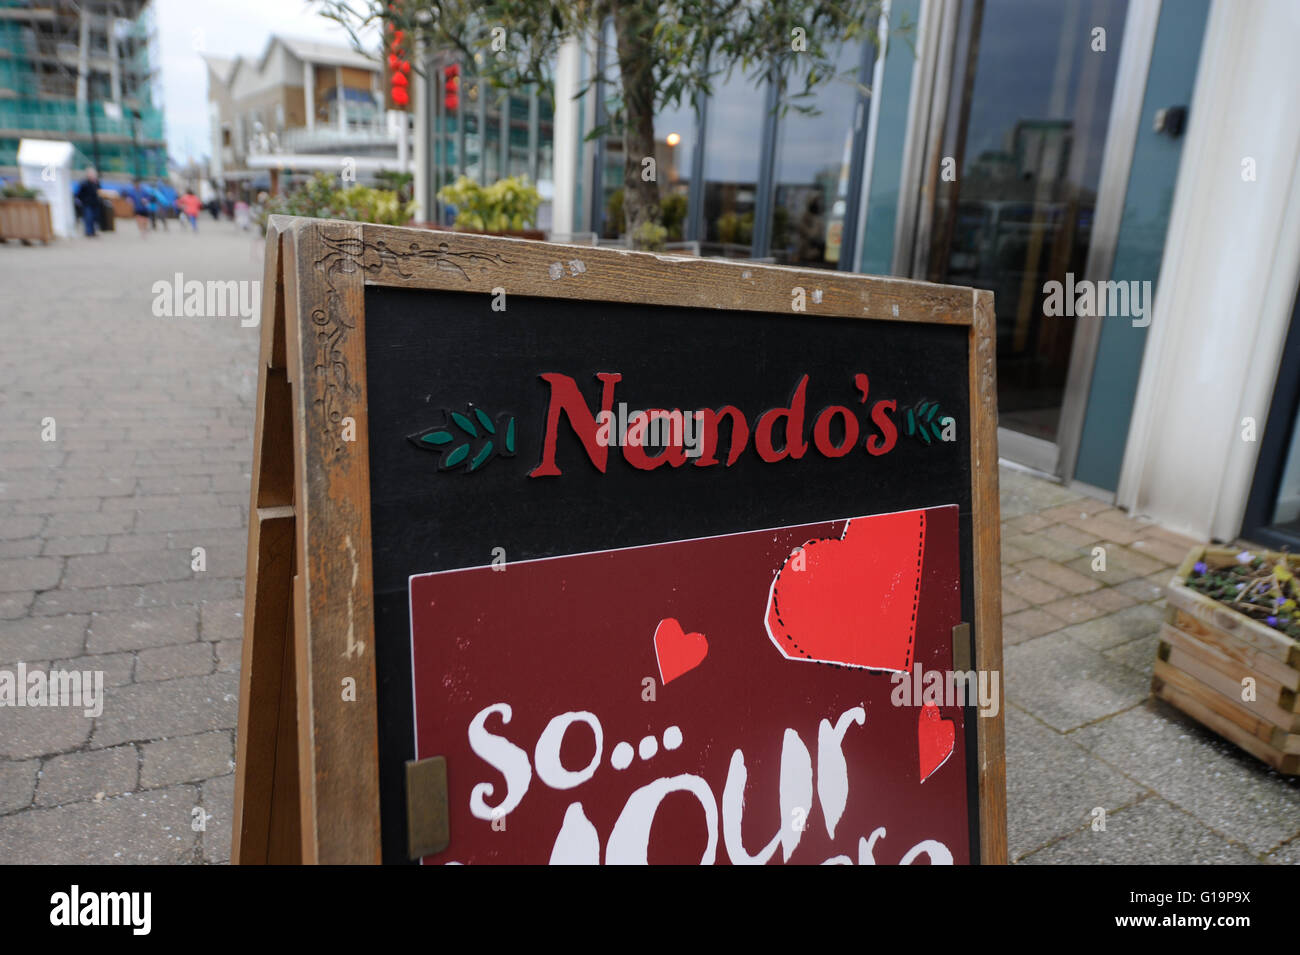 Nando's sign in Cardiff Bay - United Kingdom Stock Photo